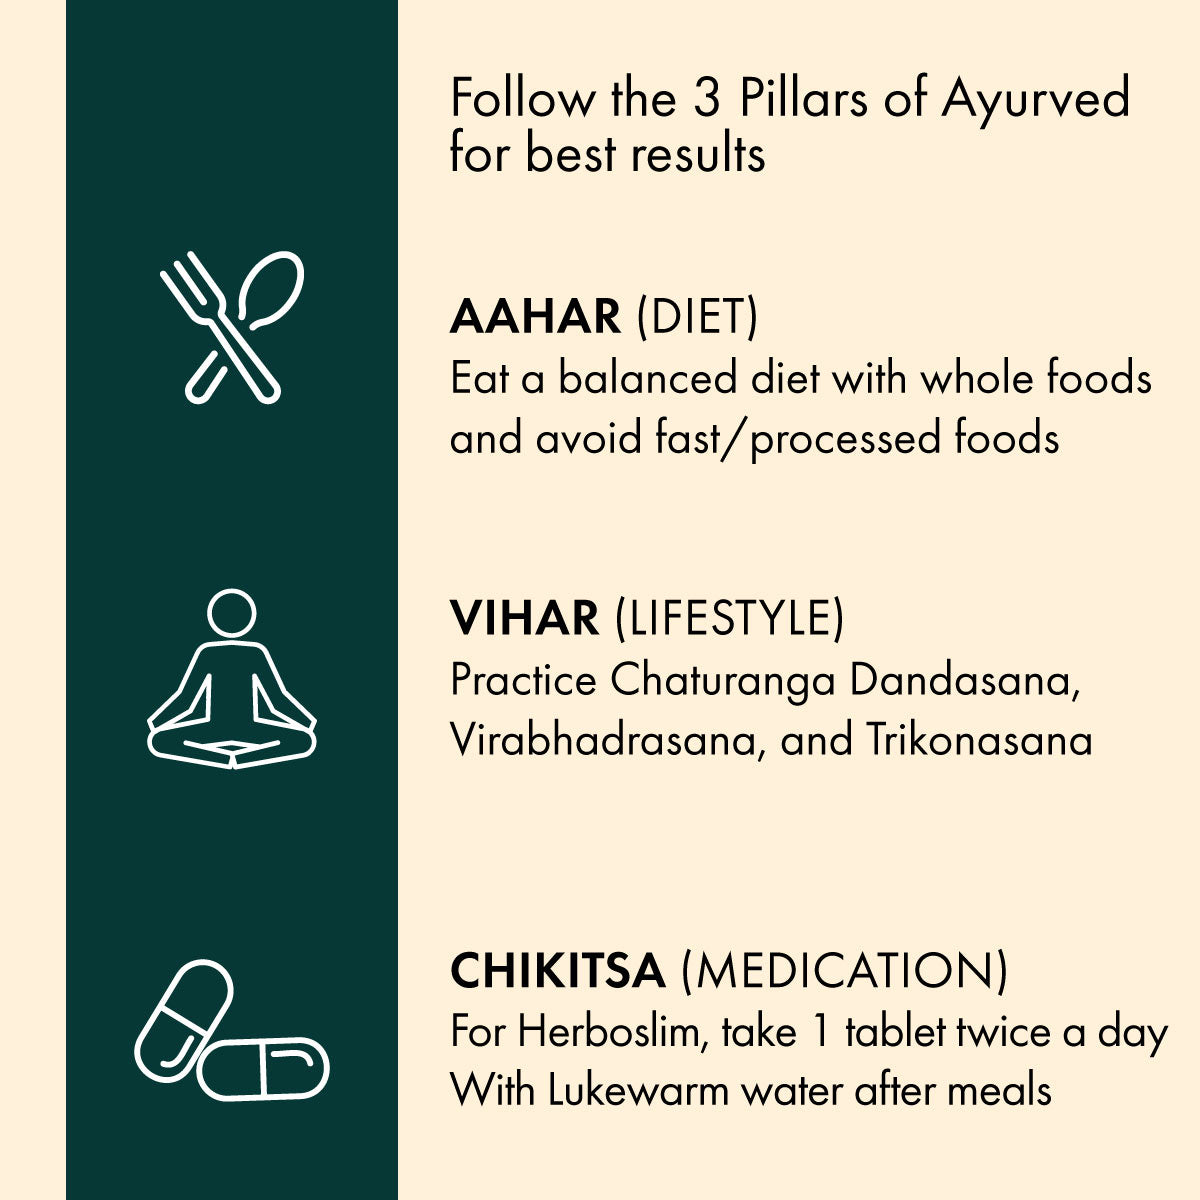 Dr. Vaidya's Herboslim: Ayurvedic Weight Loss Medicine